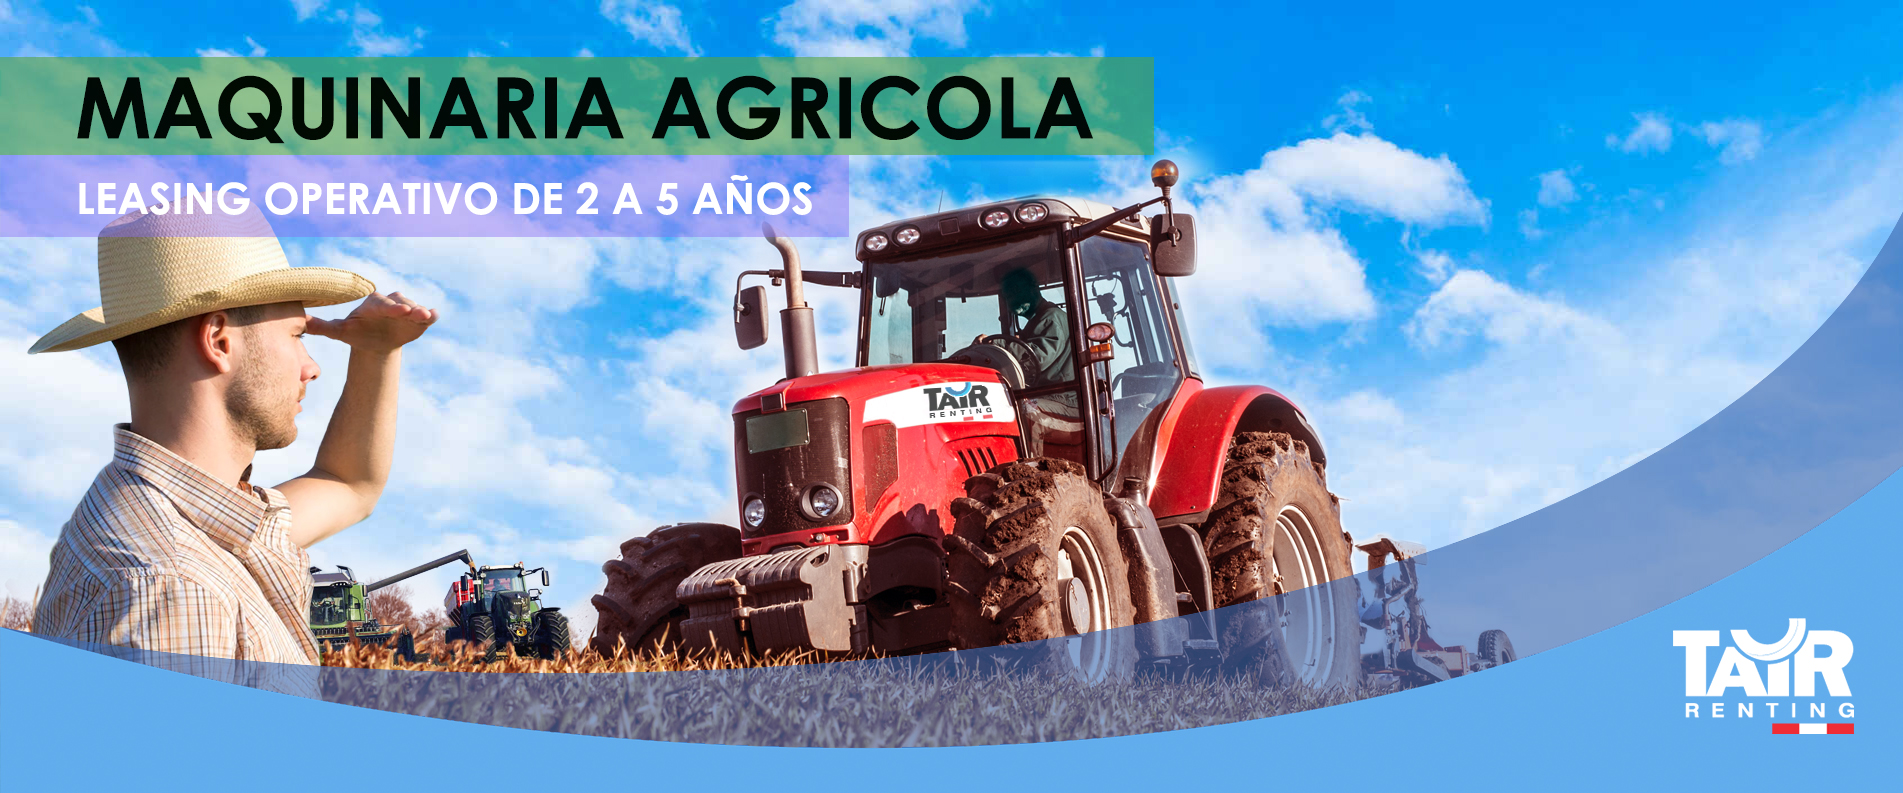 leasing_maquinaria_agricola_tair_renting_peru